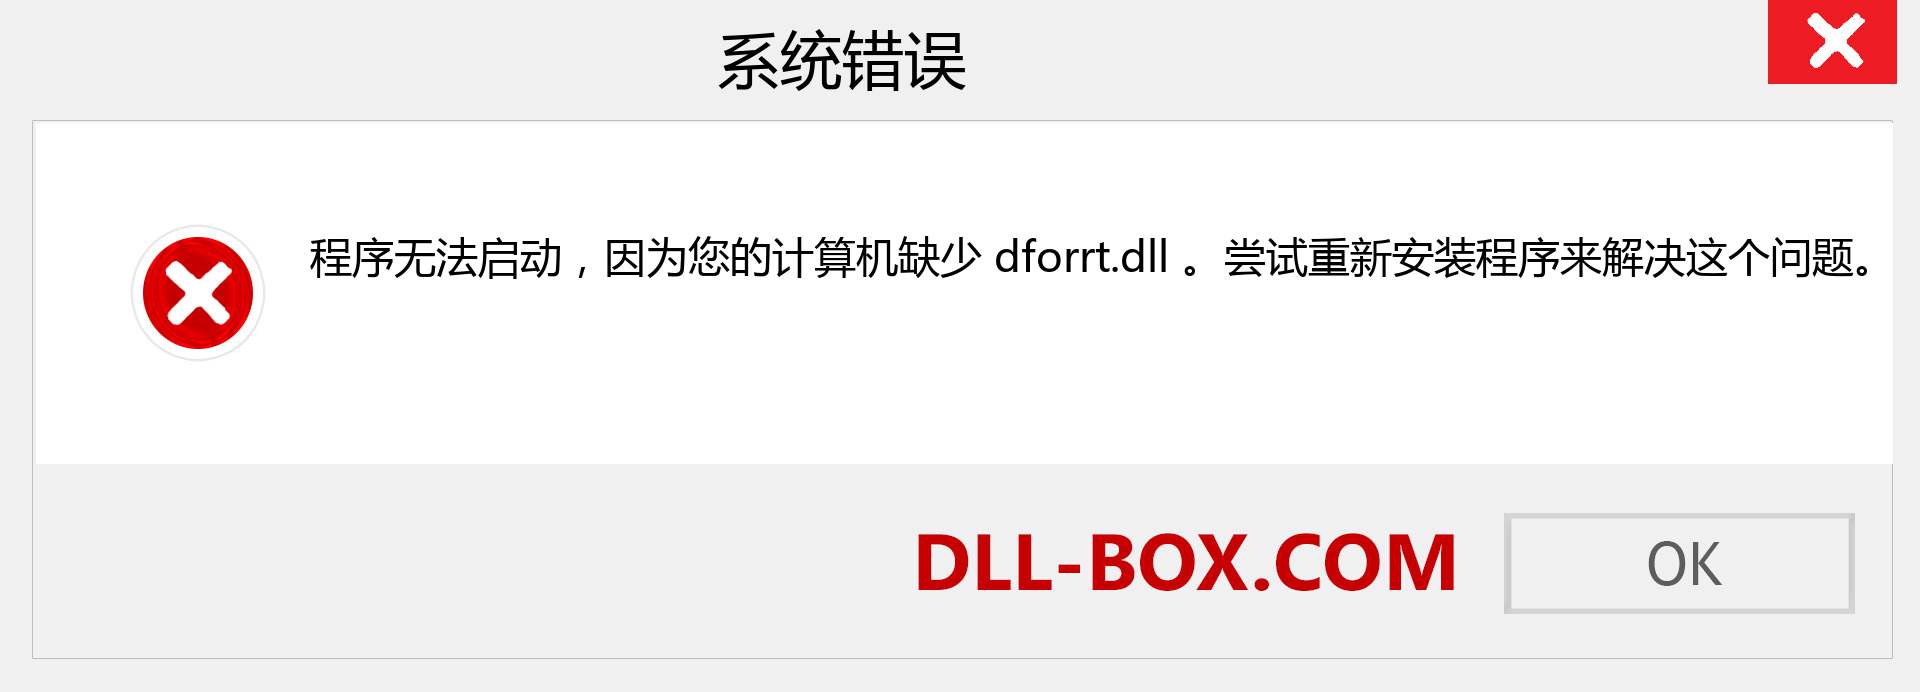 dforrt.dll 文件丢失？。 适用于 Windows 7、8、10 的下载 - 修复 Windows、照片、图像上的 dforrt dll 丢失错误